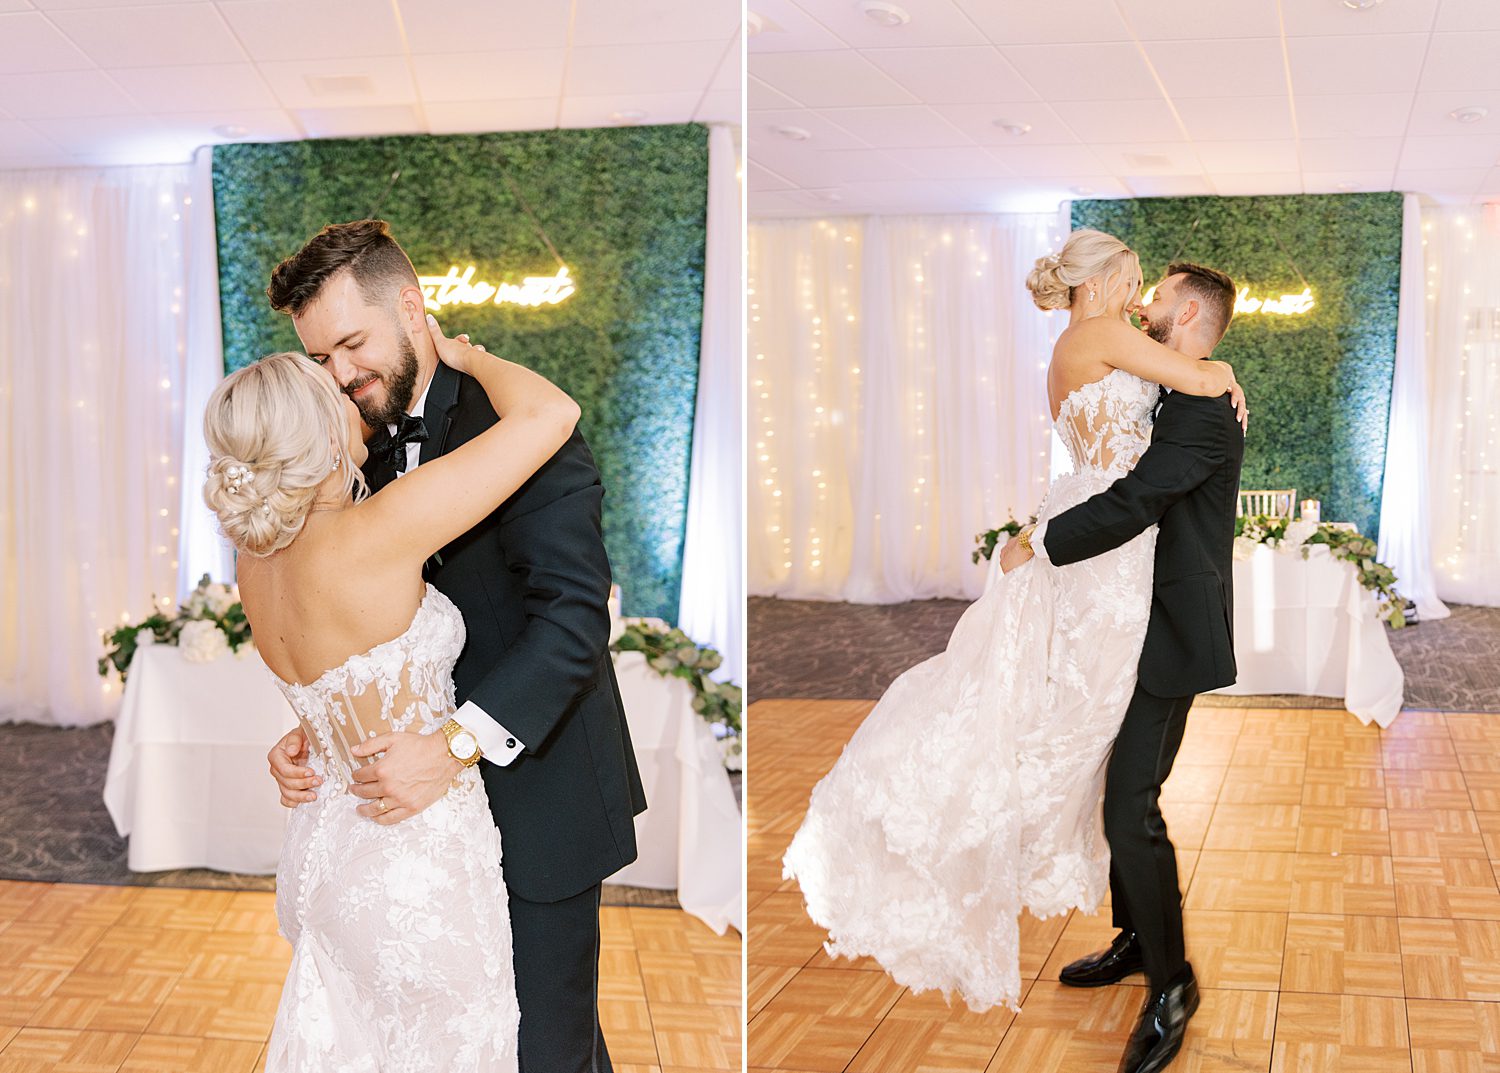 groom lifts bride and twirls her on dance floor during Godfrey wedding reception